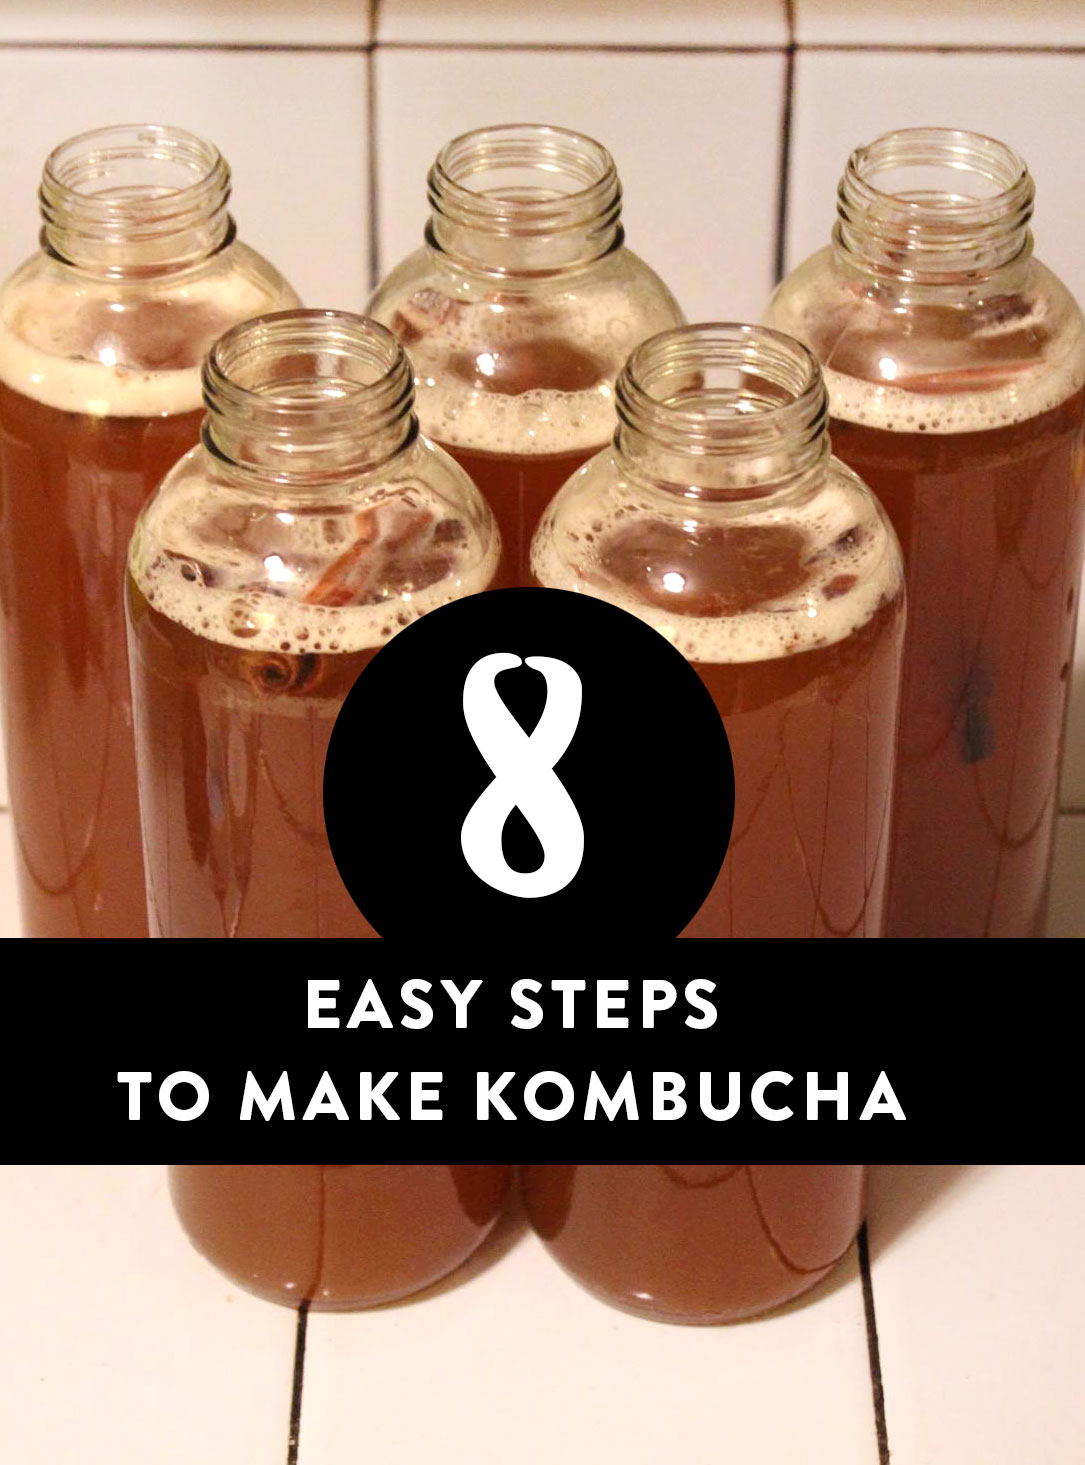 8 Easy Steps to Make Kombucha at home